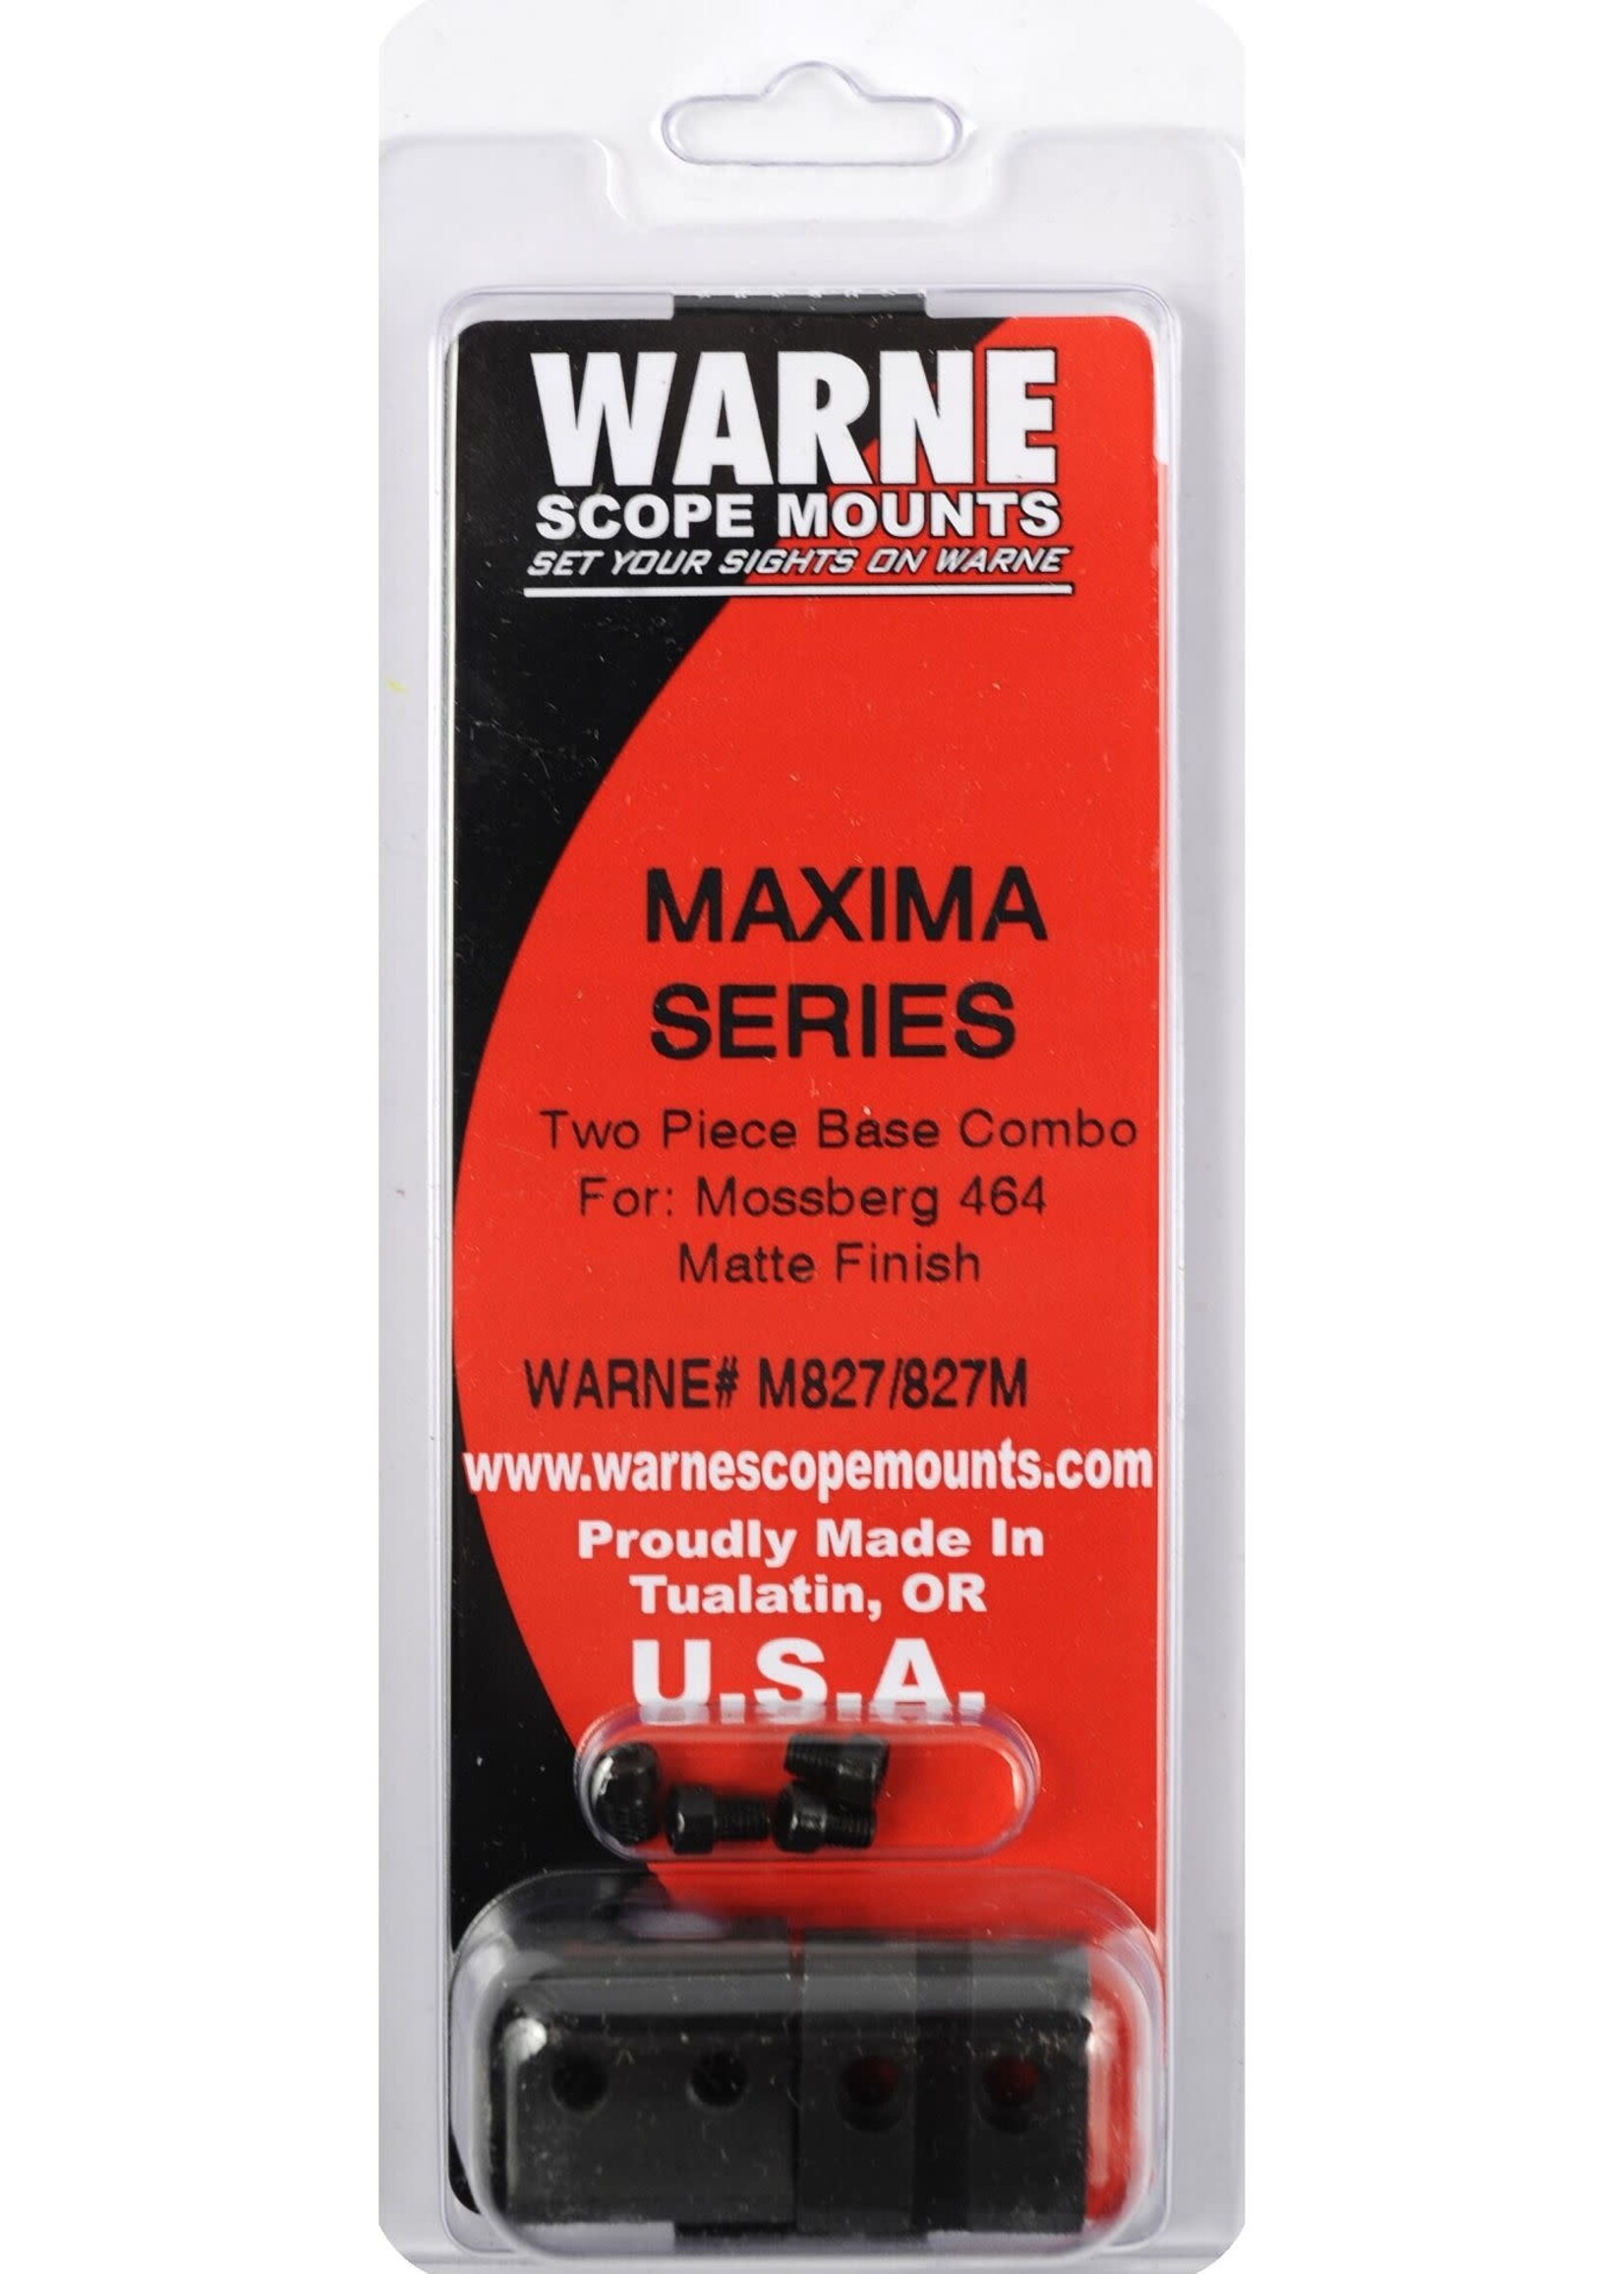 WARNE MAXIMA 2 PIECE WEAVER STEEL BASES FOR MOSSBERG 464 MODELS